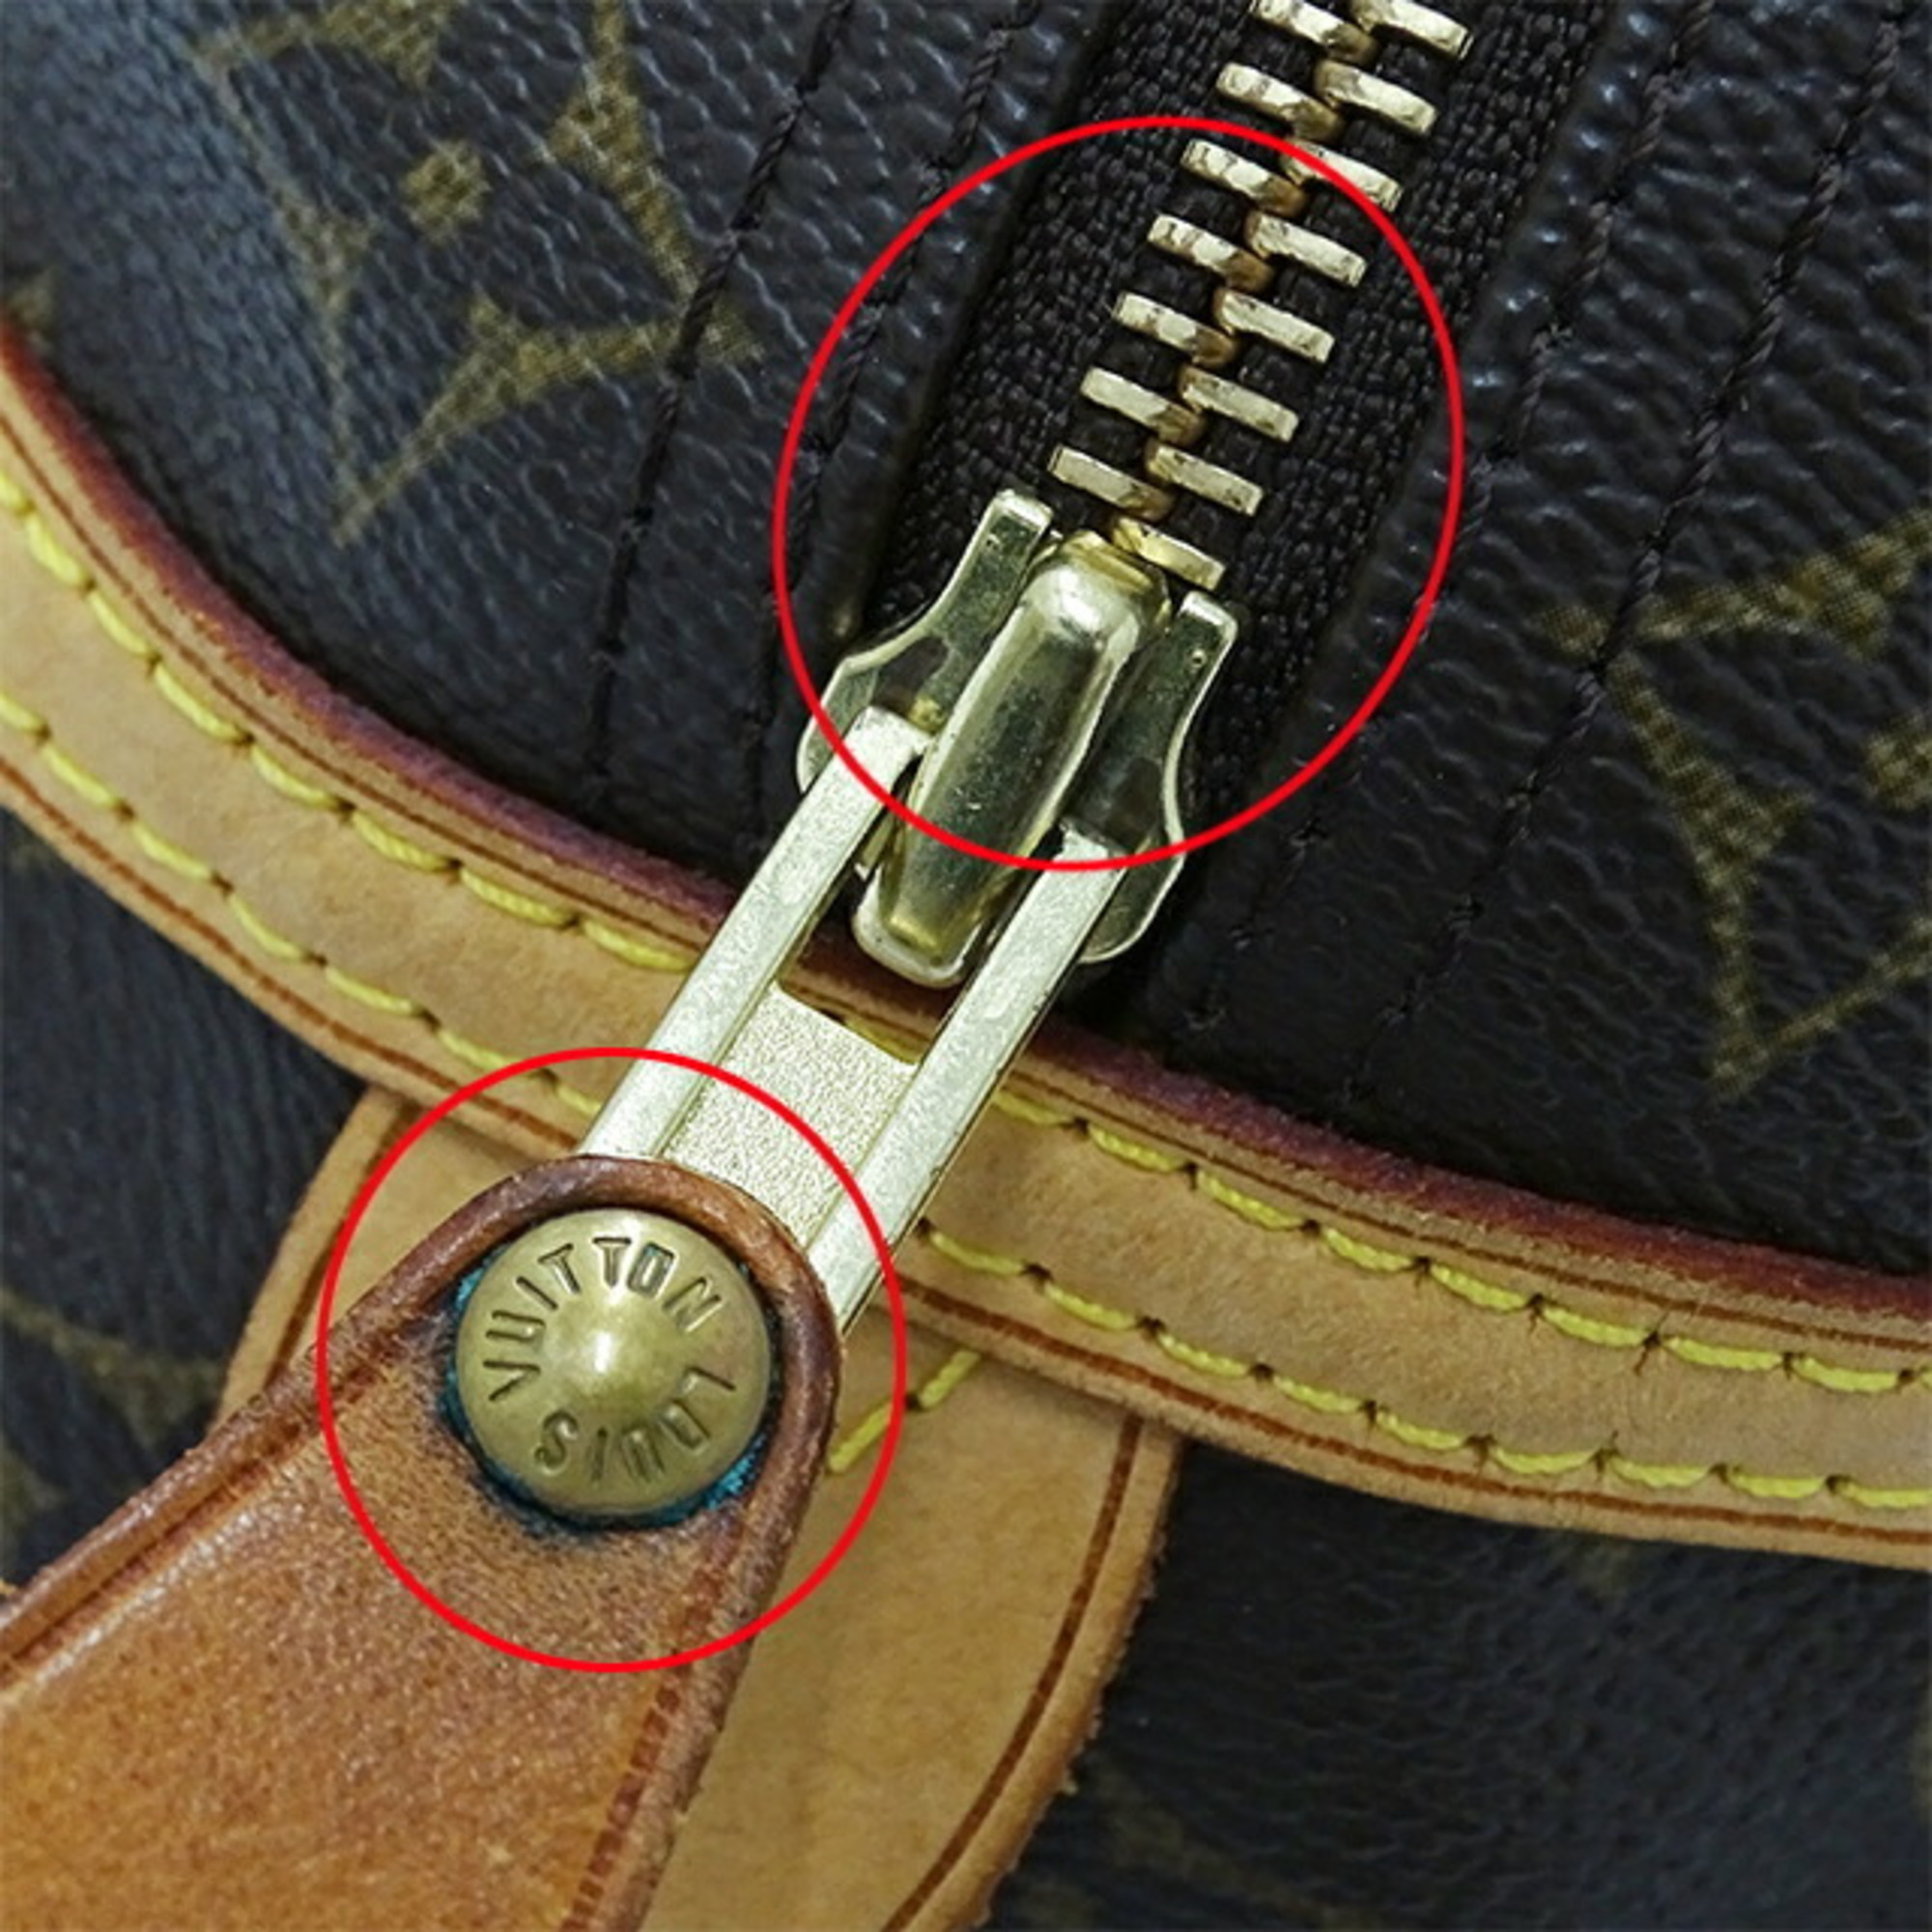 Louis Vuitton LOUIS VUITTON Bag Monogram Women's Handbag Montorgueil PM Brown M95565 Outing